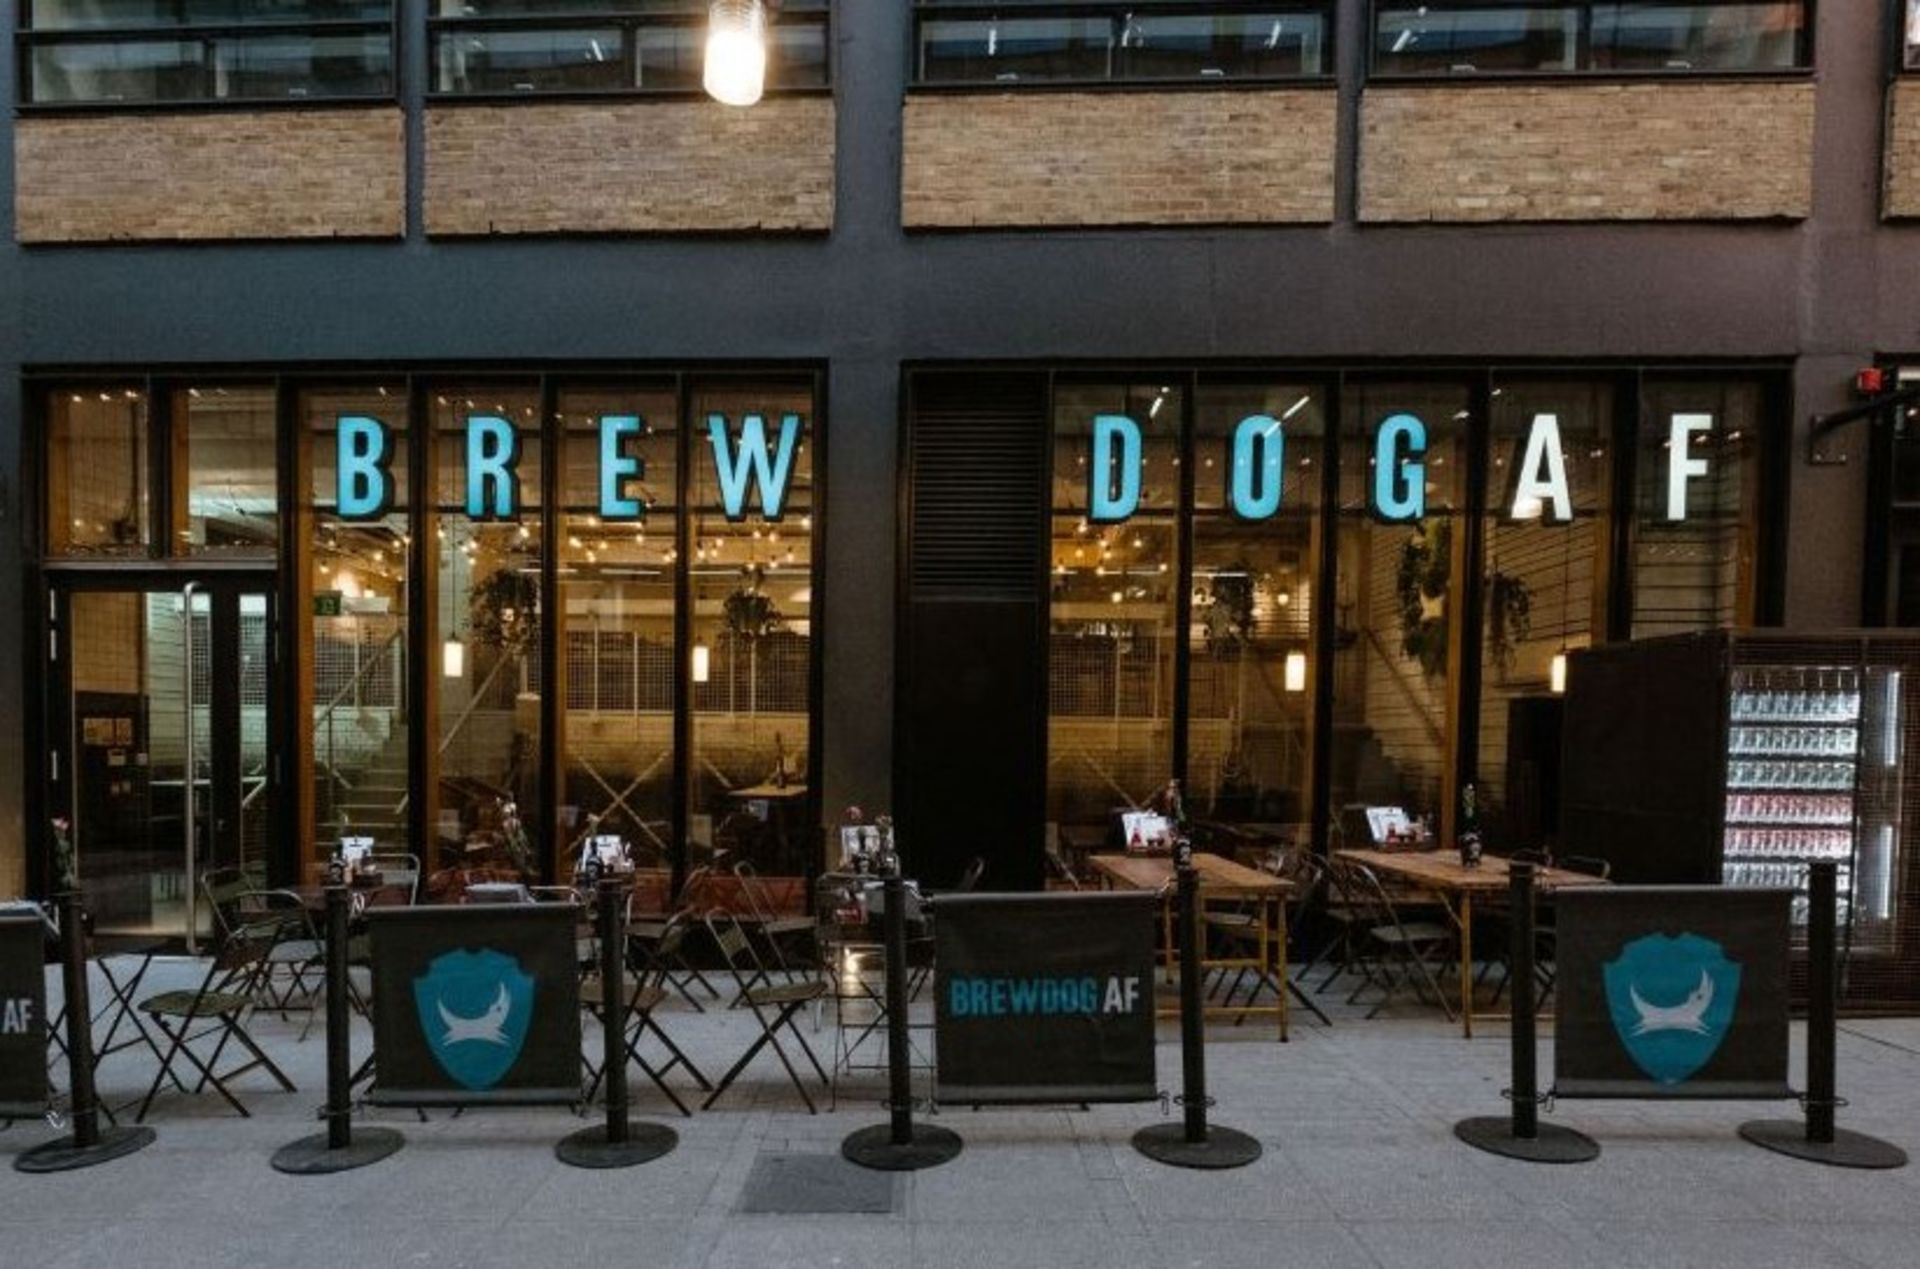 BrewDog AF Bar opens next week in London